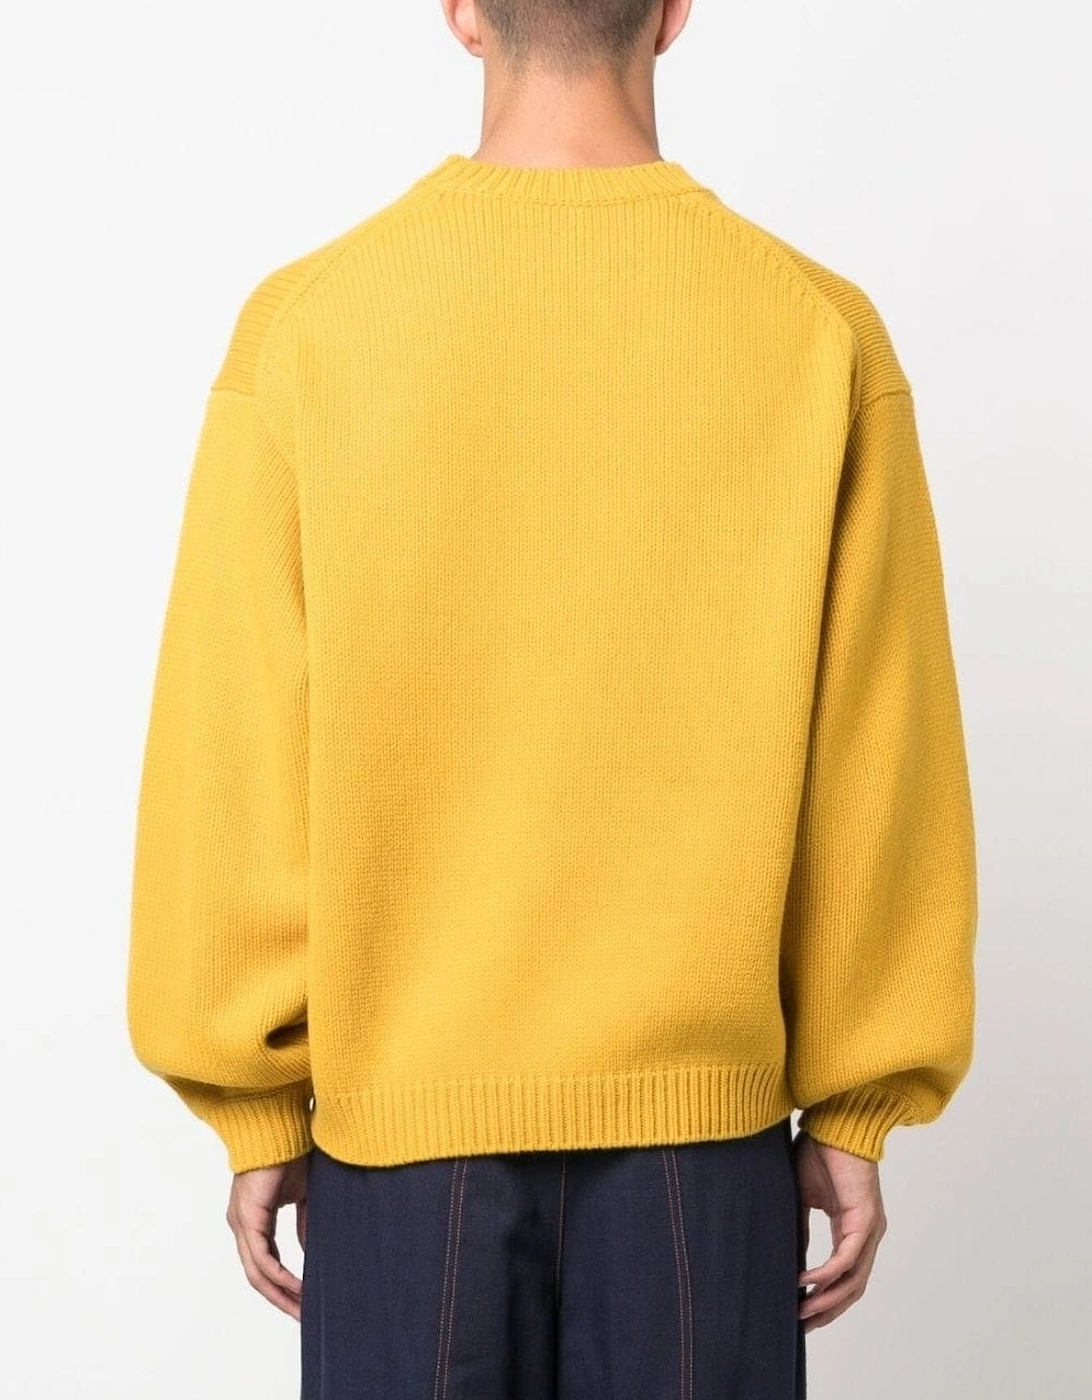 Tricolor Paris Sweater Yellow